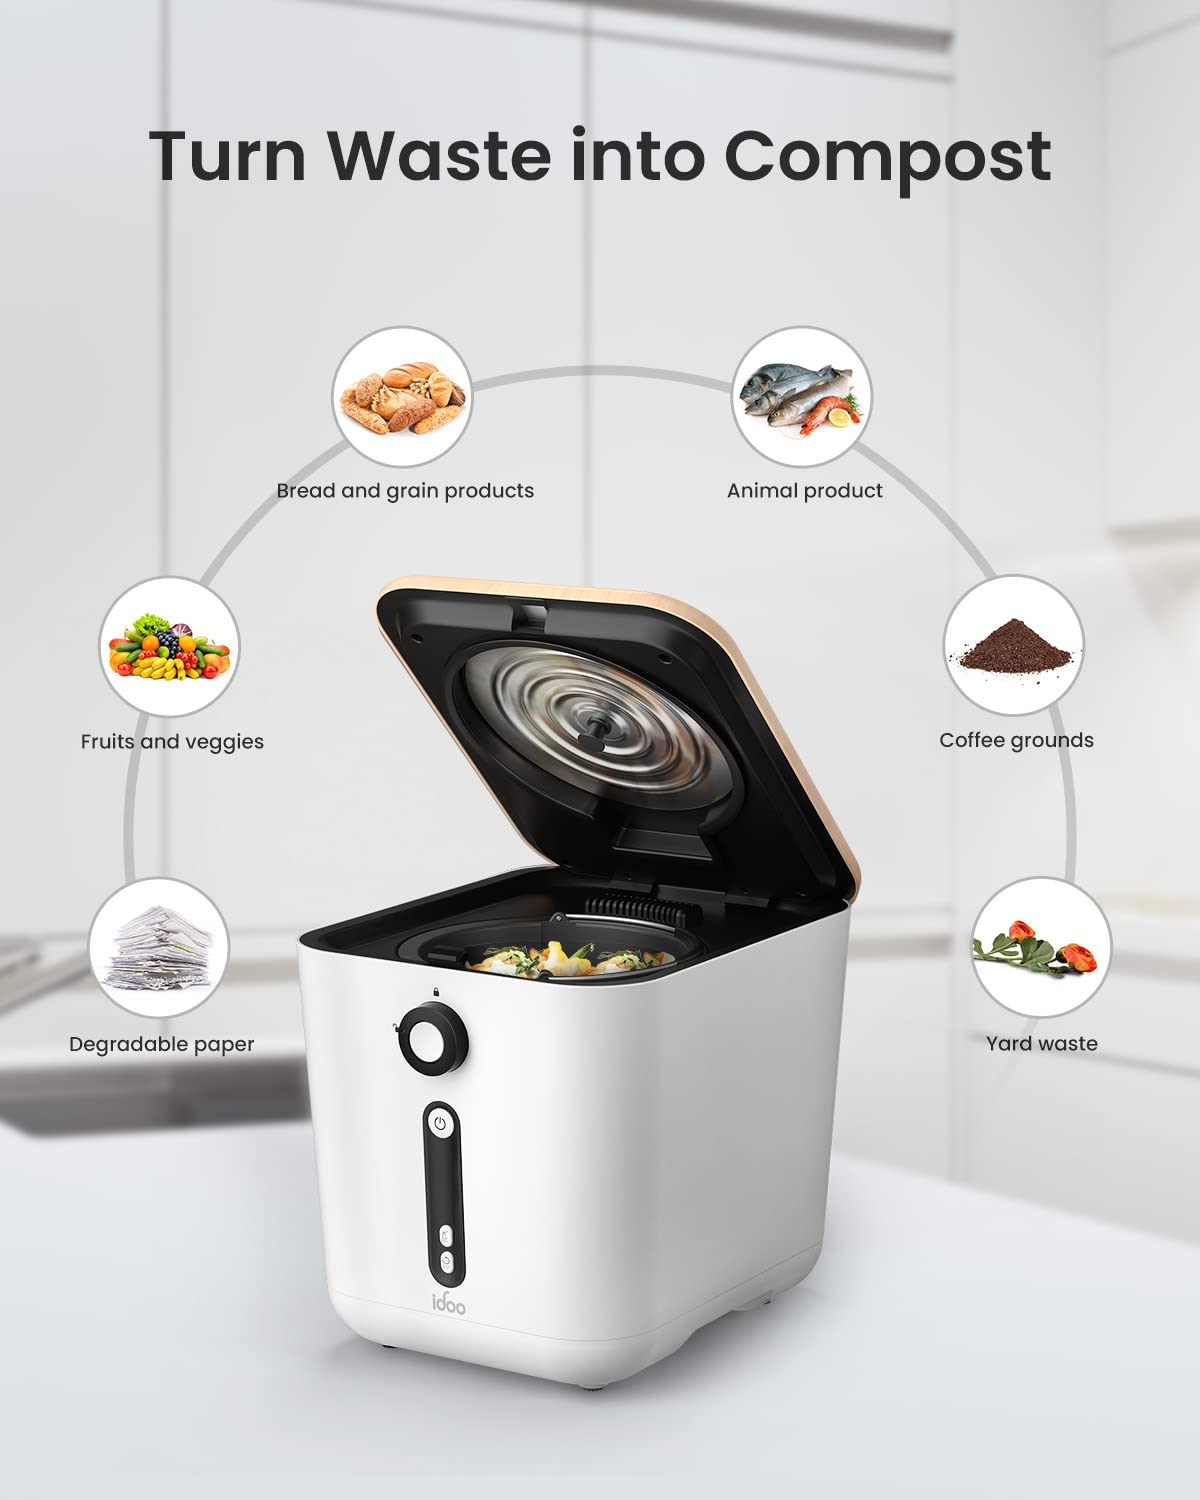 iDOO Smart Kitchen Composter